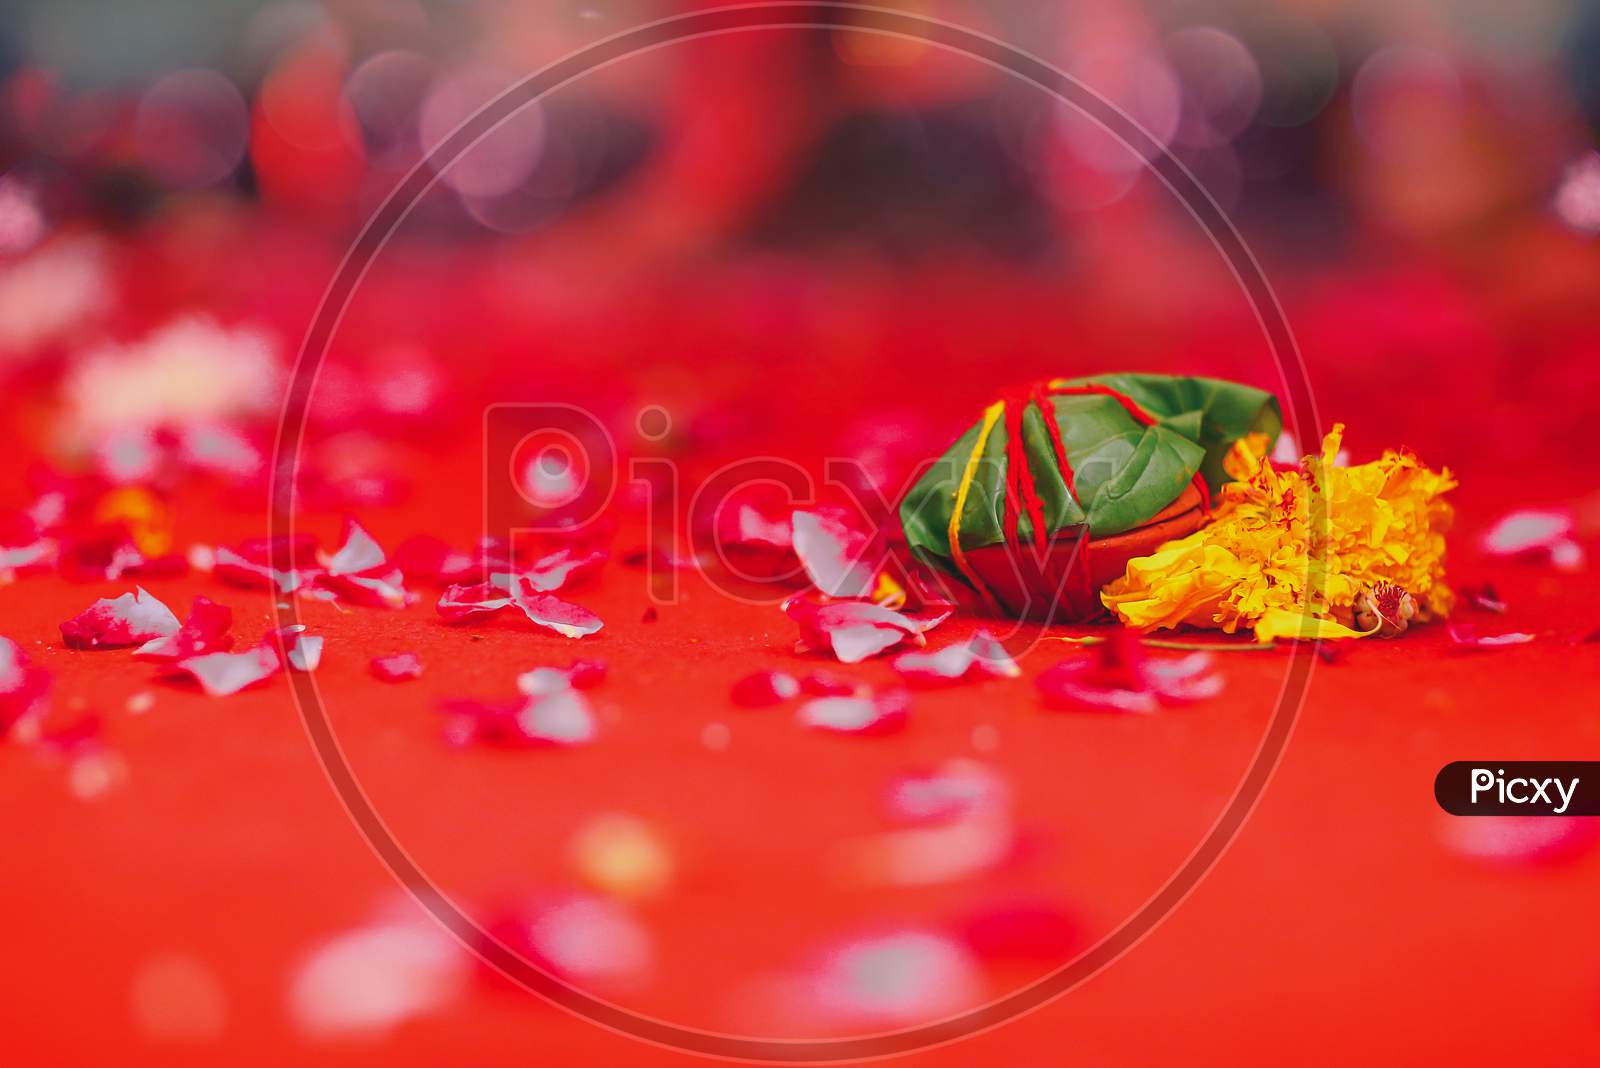 Photograph of Indian Wedding Ceremony